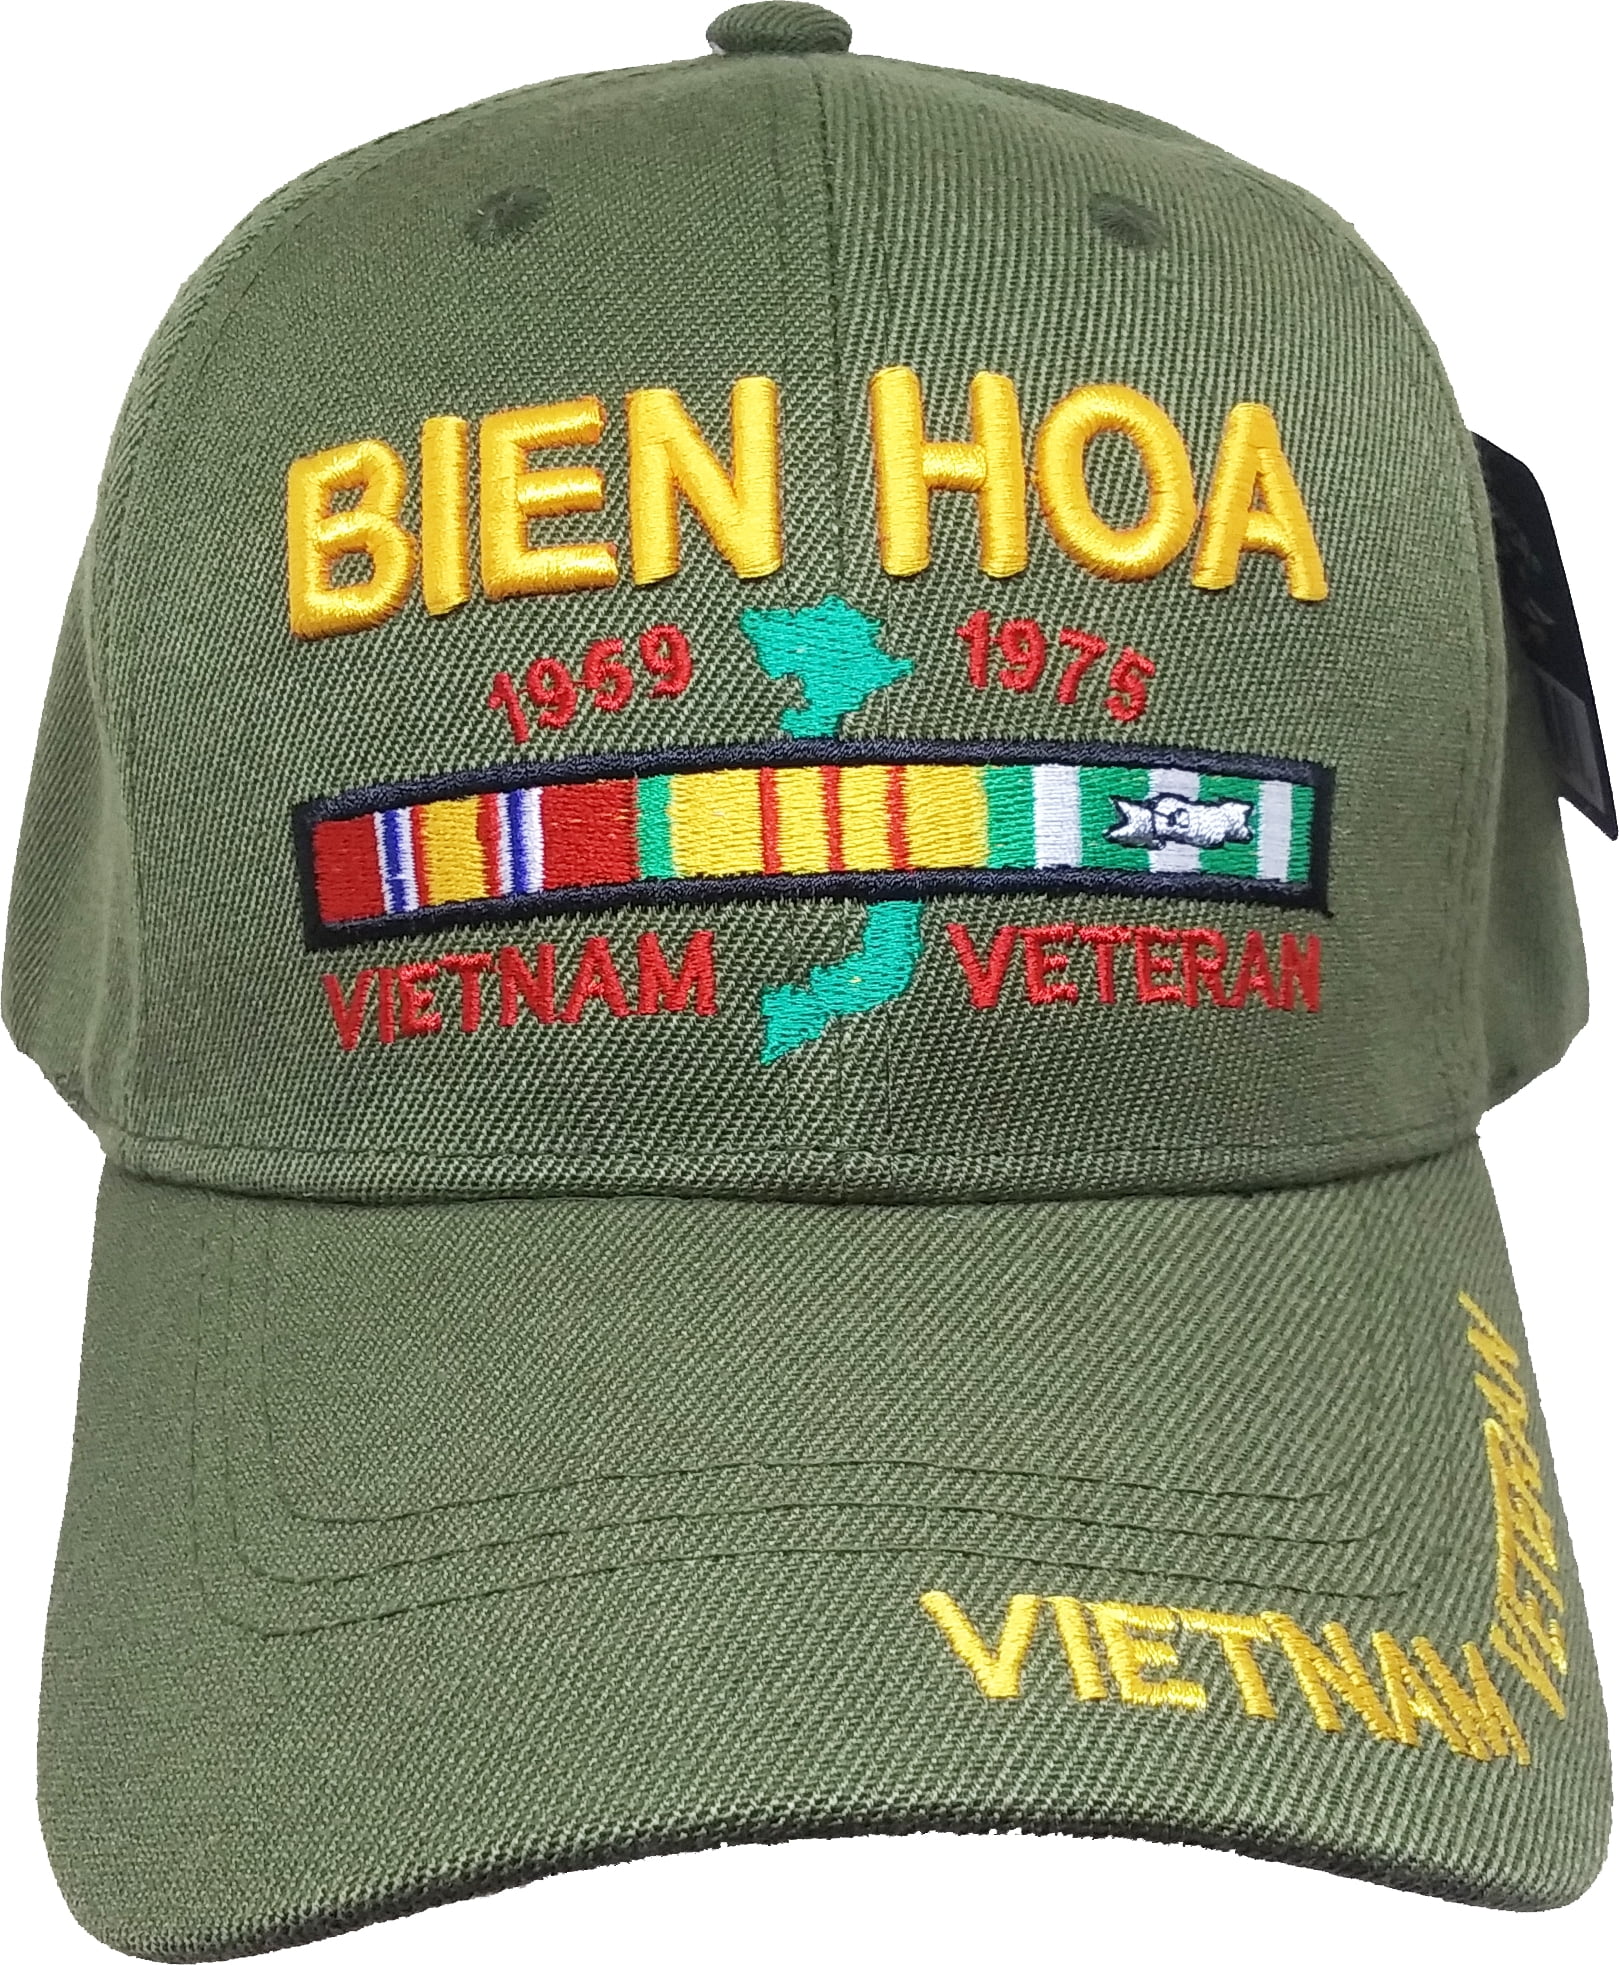 Buy Caps and Hats Korea Veteran Baseball Cap Olive Drab OD Green Hat